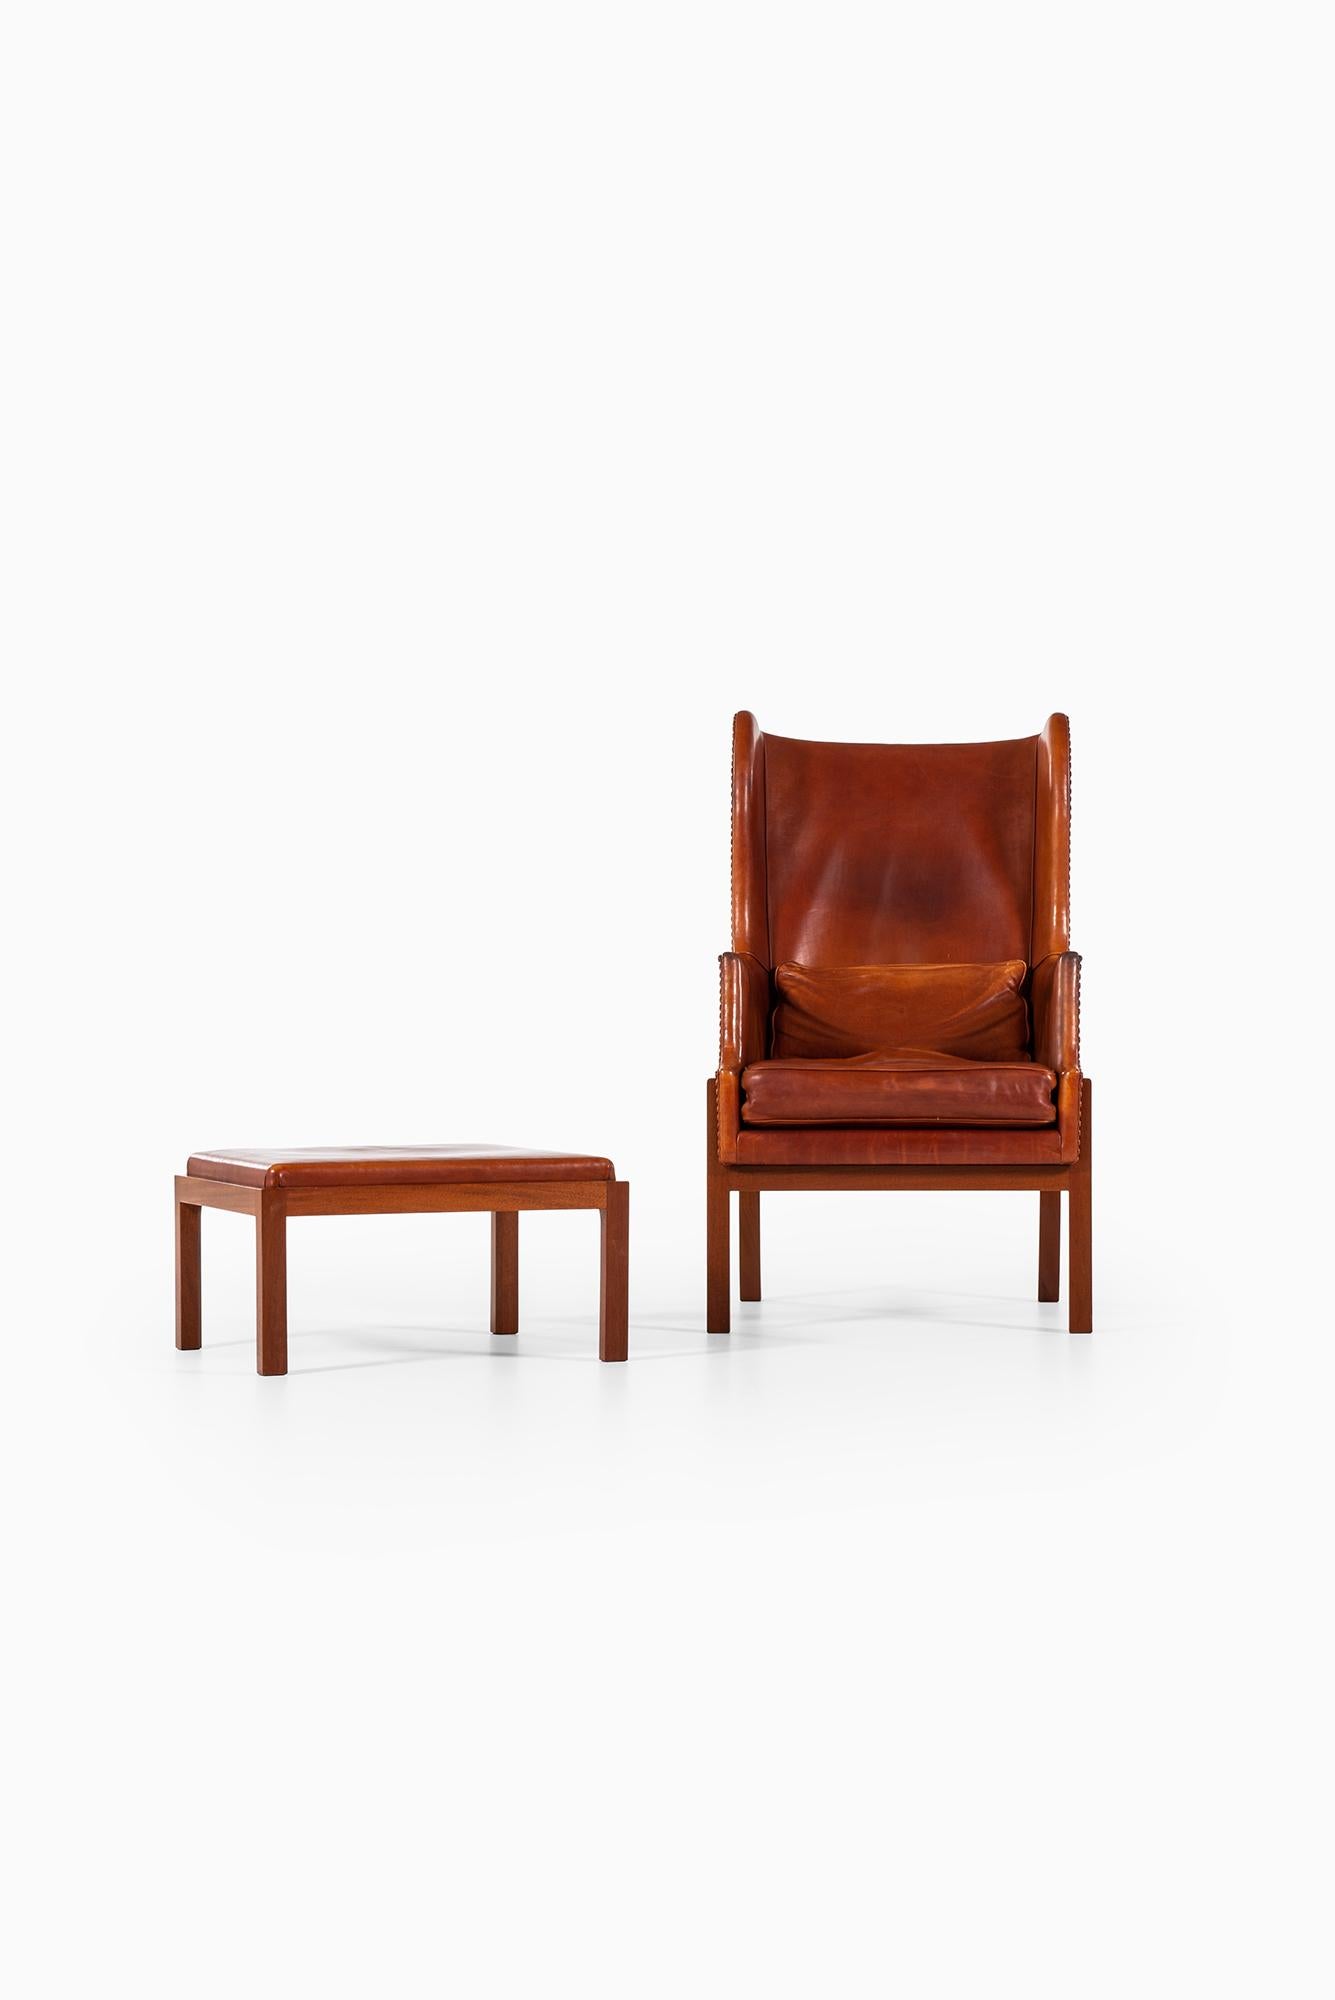 Danish Mogens Koch Wing-Back Lounge Chair with Stool by Cabinetmaker Rud Rasmussen